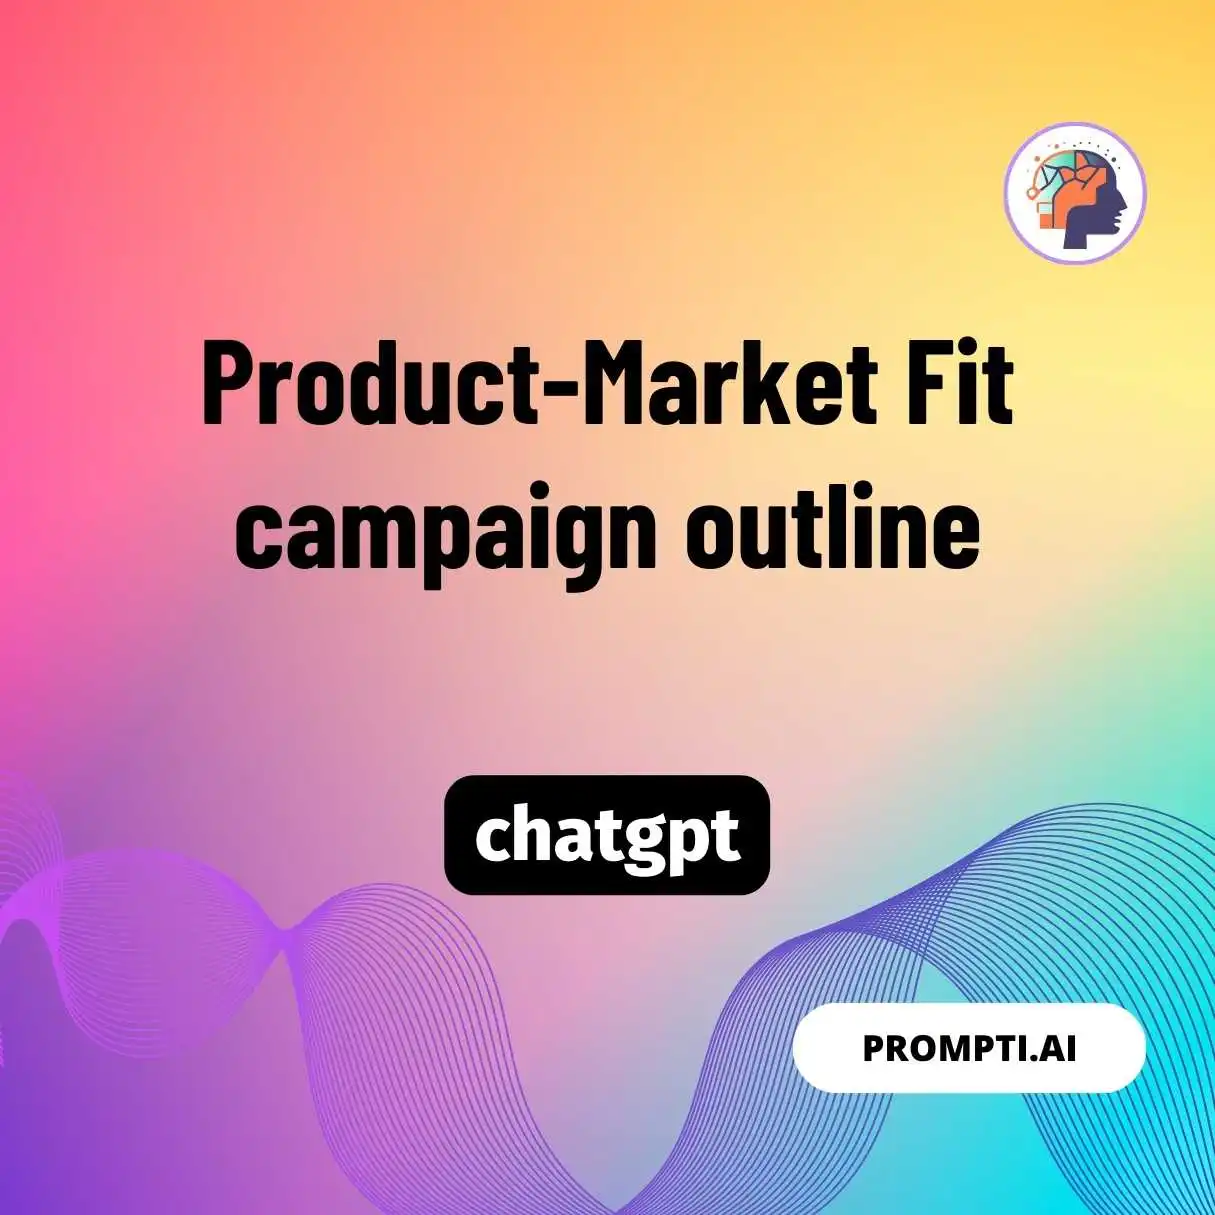 Product-Market Fit campaign outline